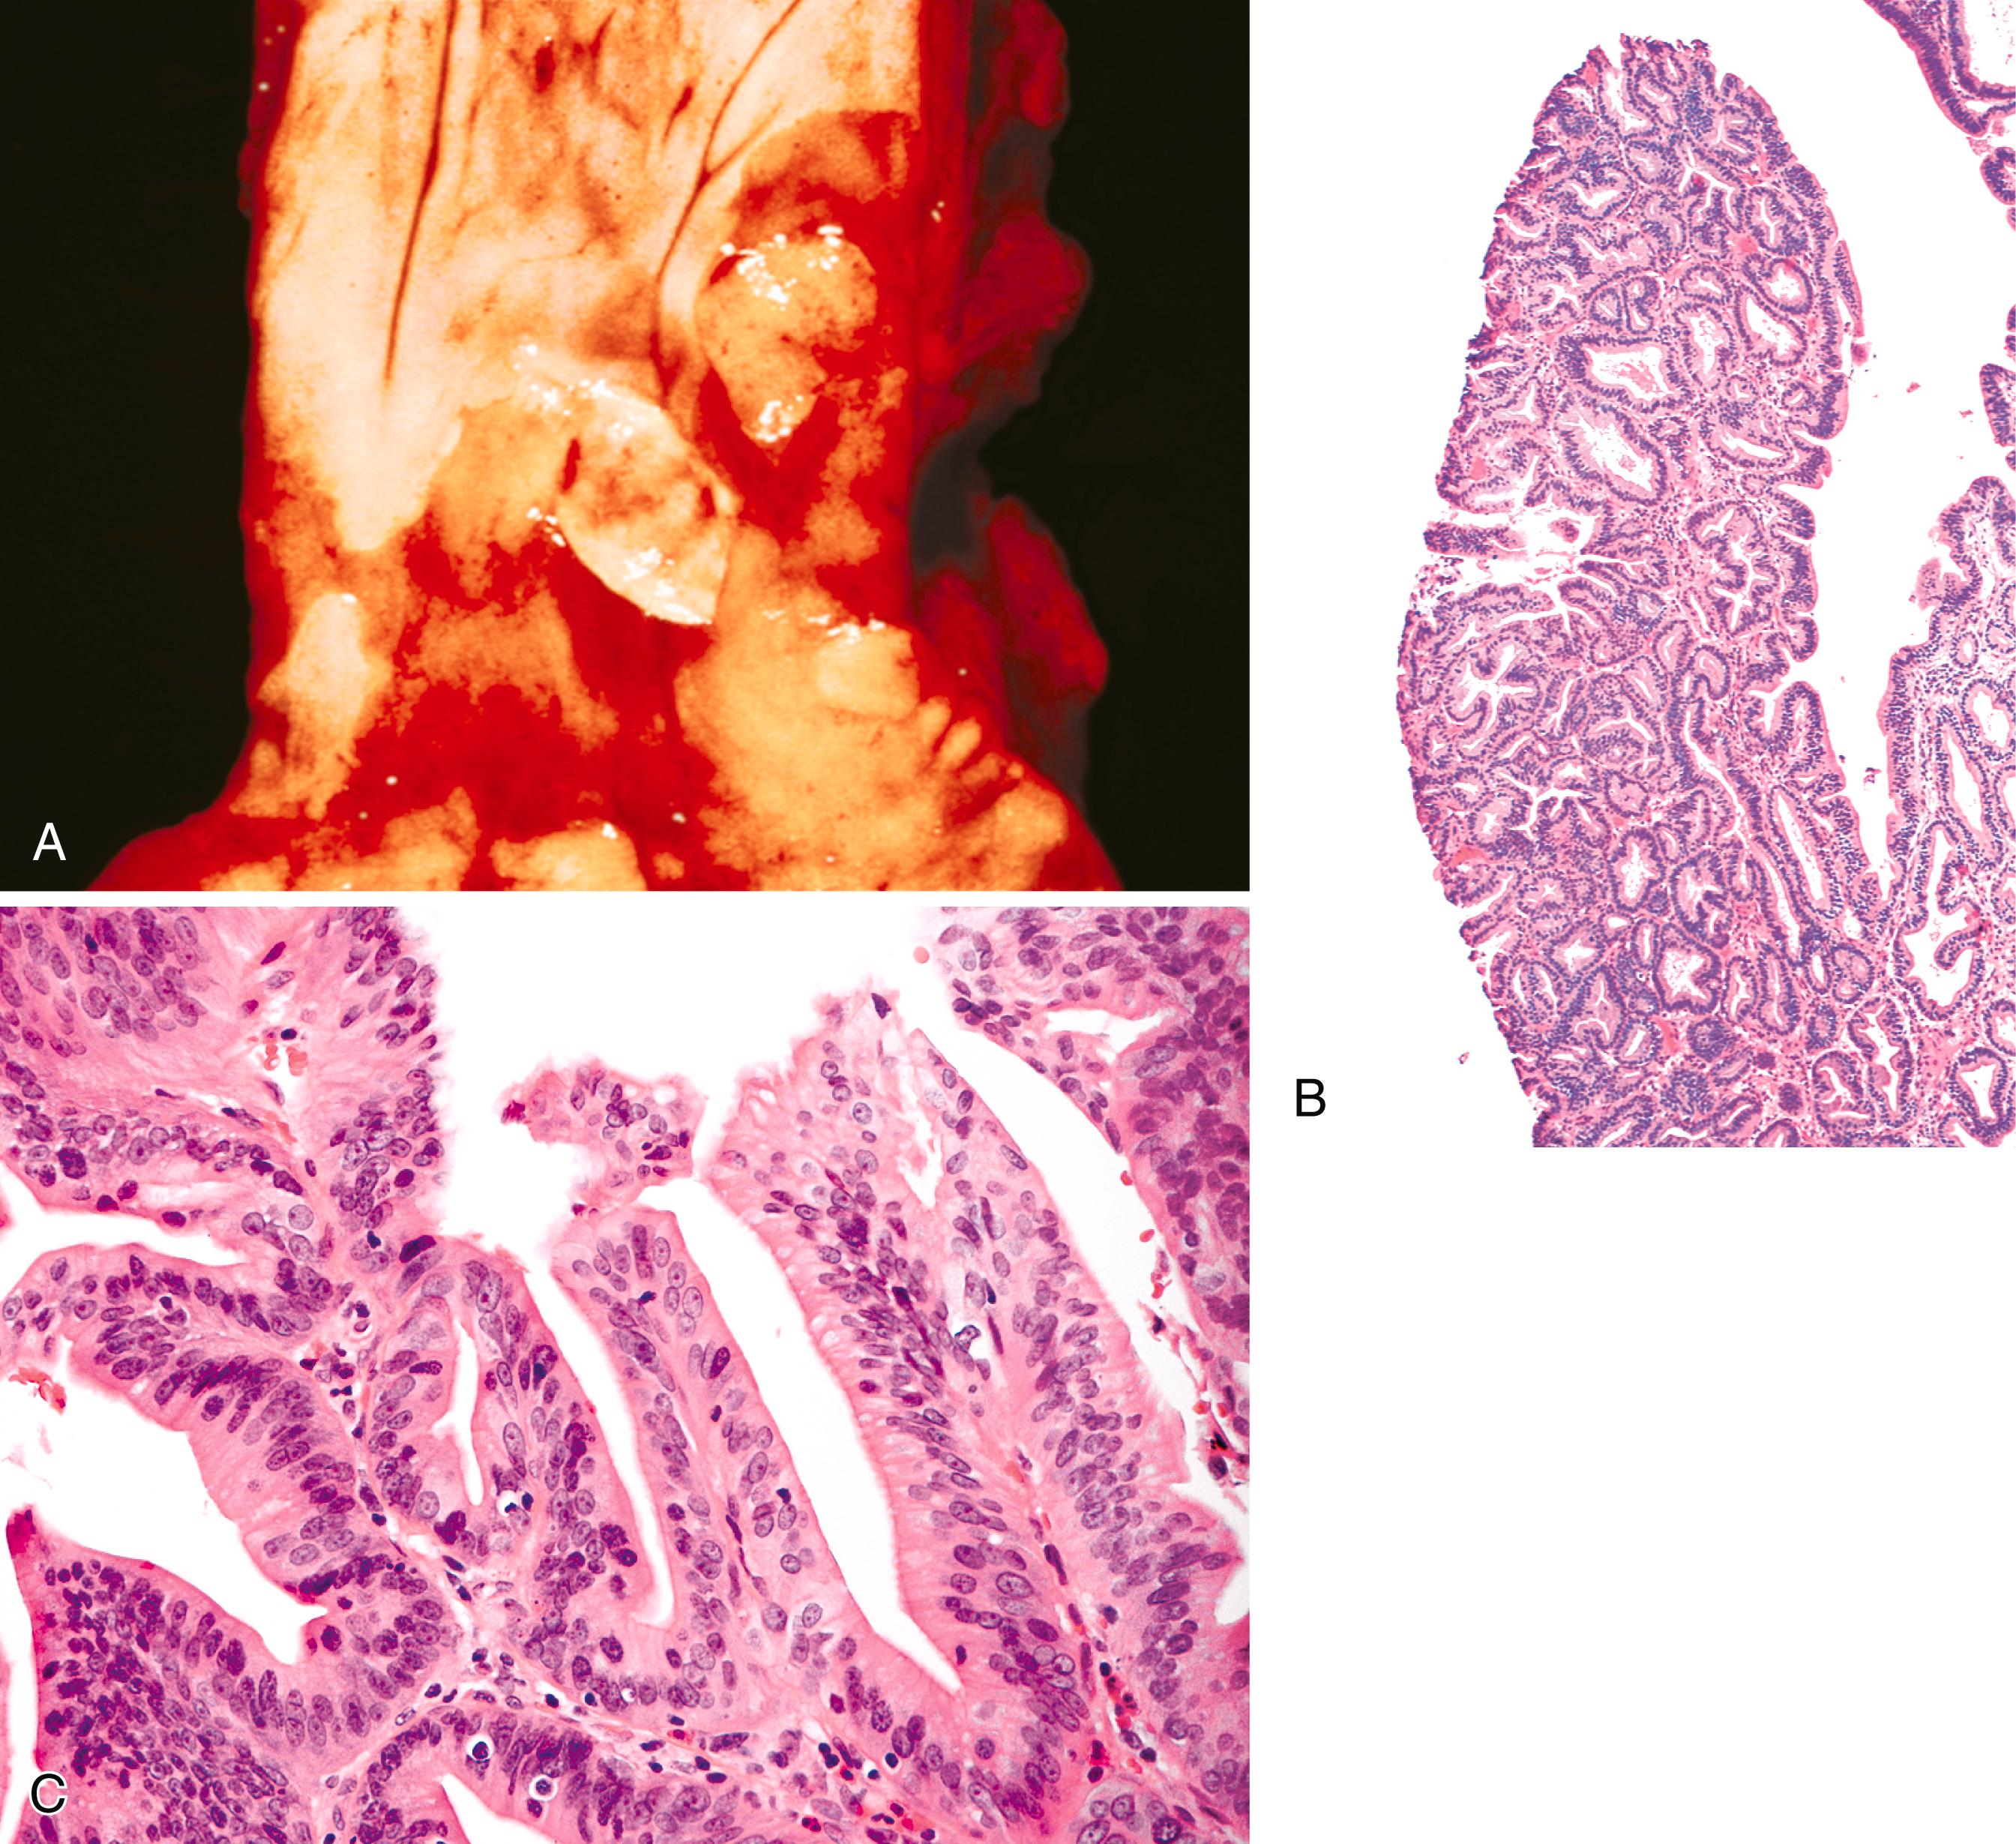 FIGURE 24.4, Polypoid dysplasia in Barrett’s esophagus.